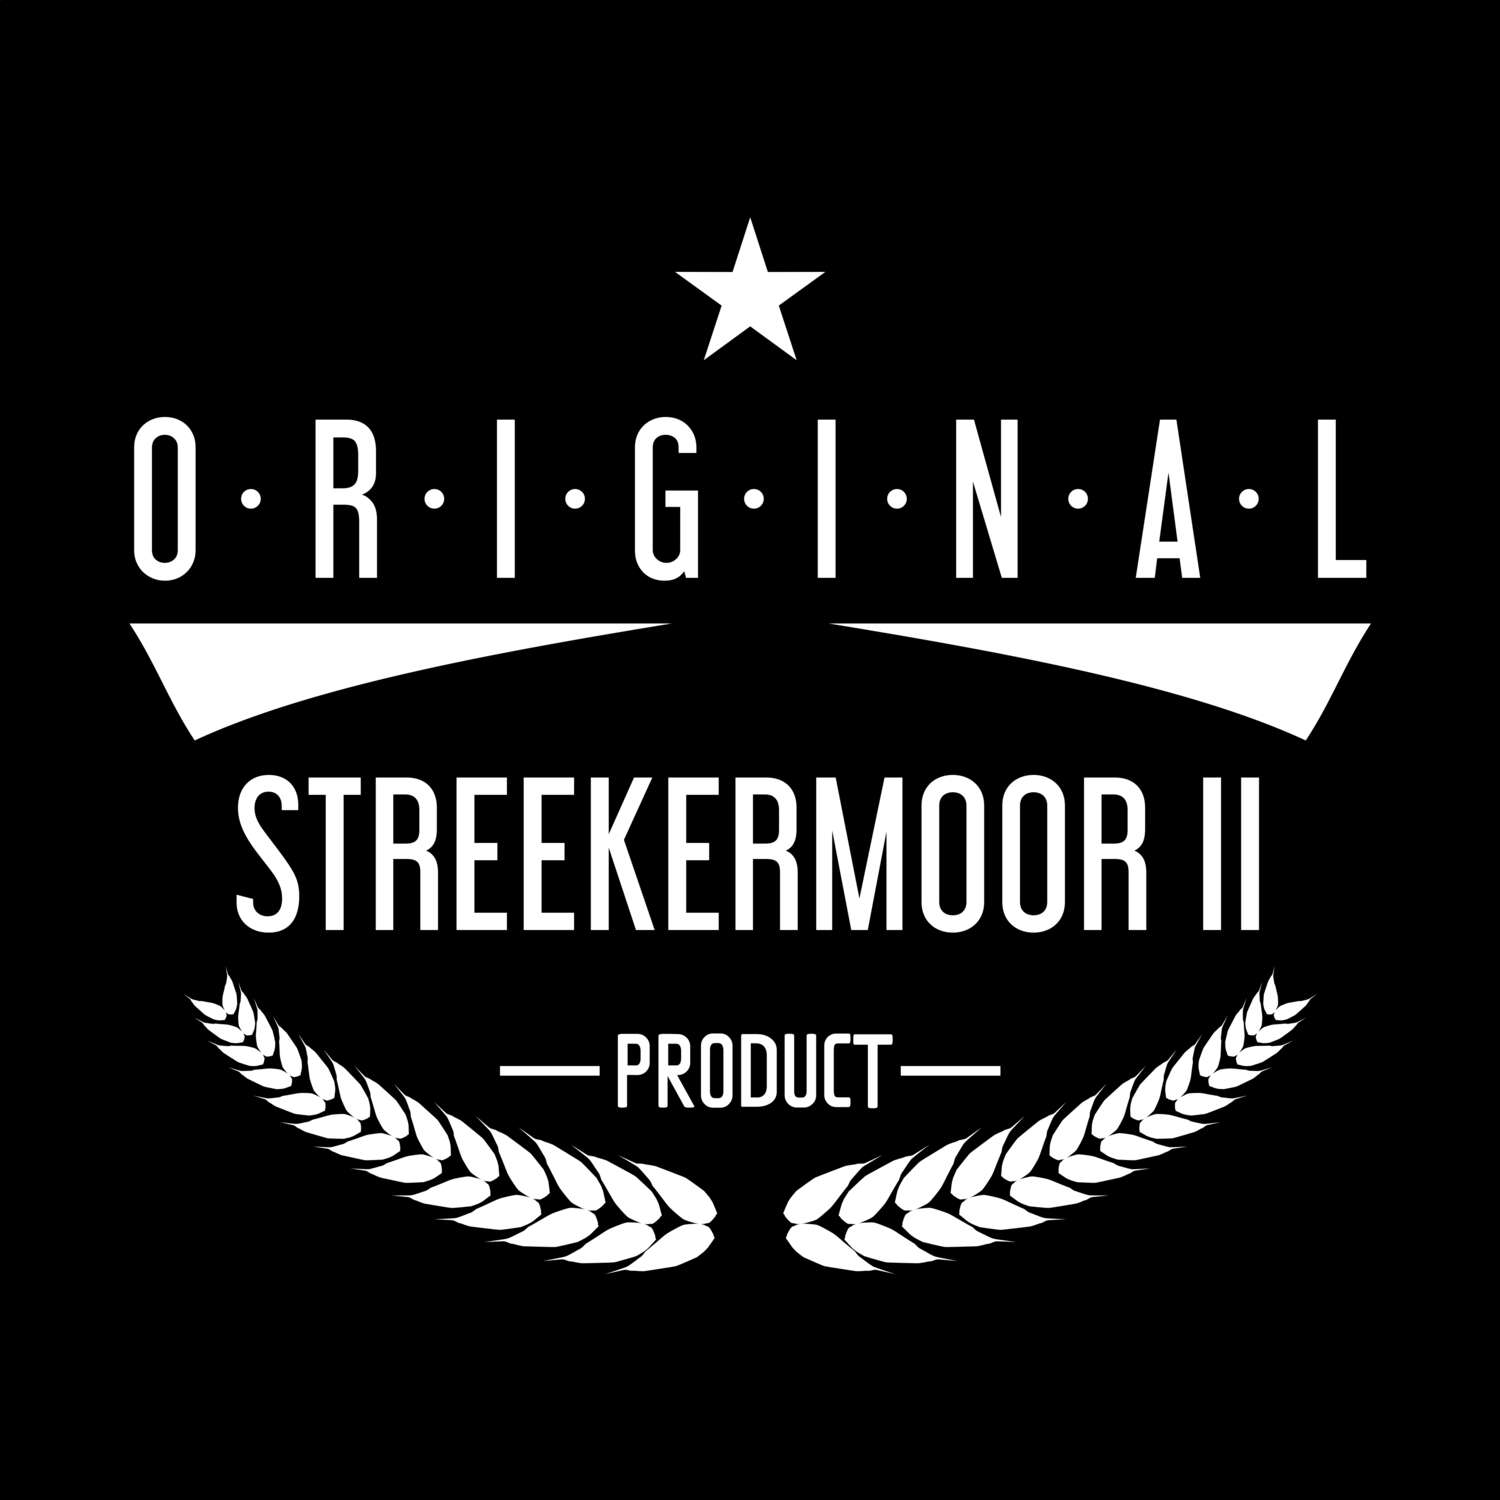 Streekermoor II T-Shirt »Original Product«